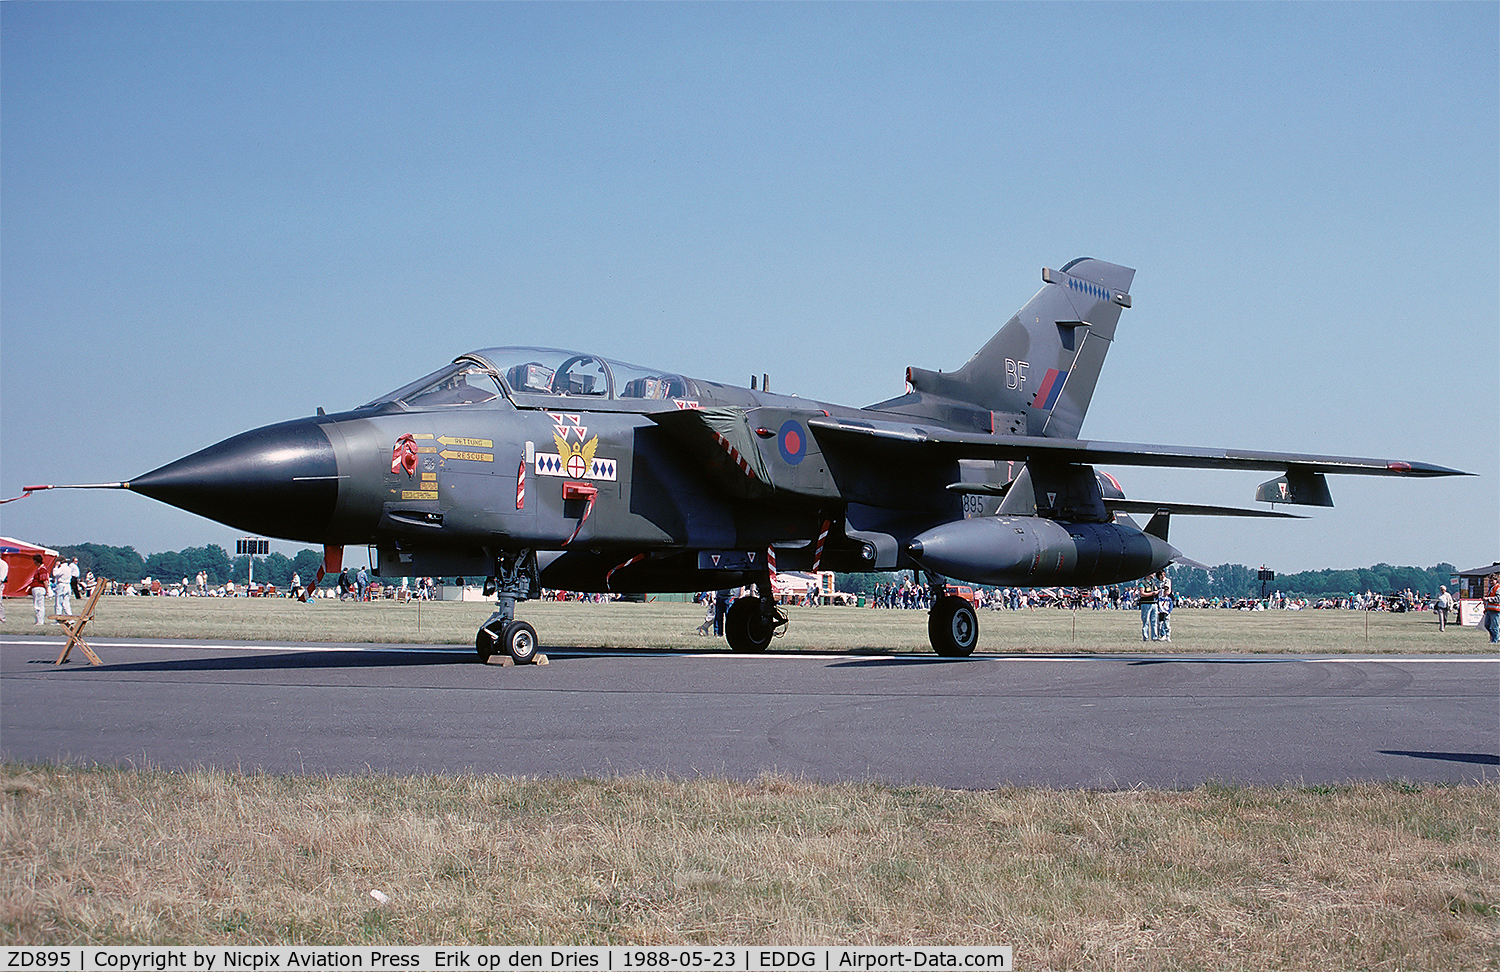 ZD895, 1985 Panavia Tornado GR.1 C/N 477/BS155/3216, RAF-Germany's Tornado GR.1 was assigend to no. 14 sqn and based at RAF Bruggen, Germany.